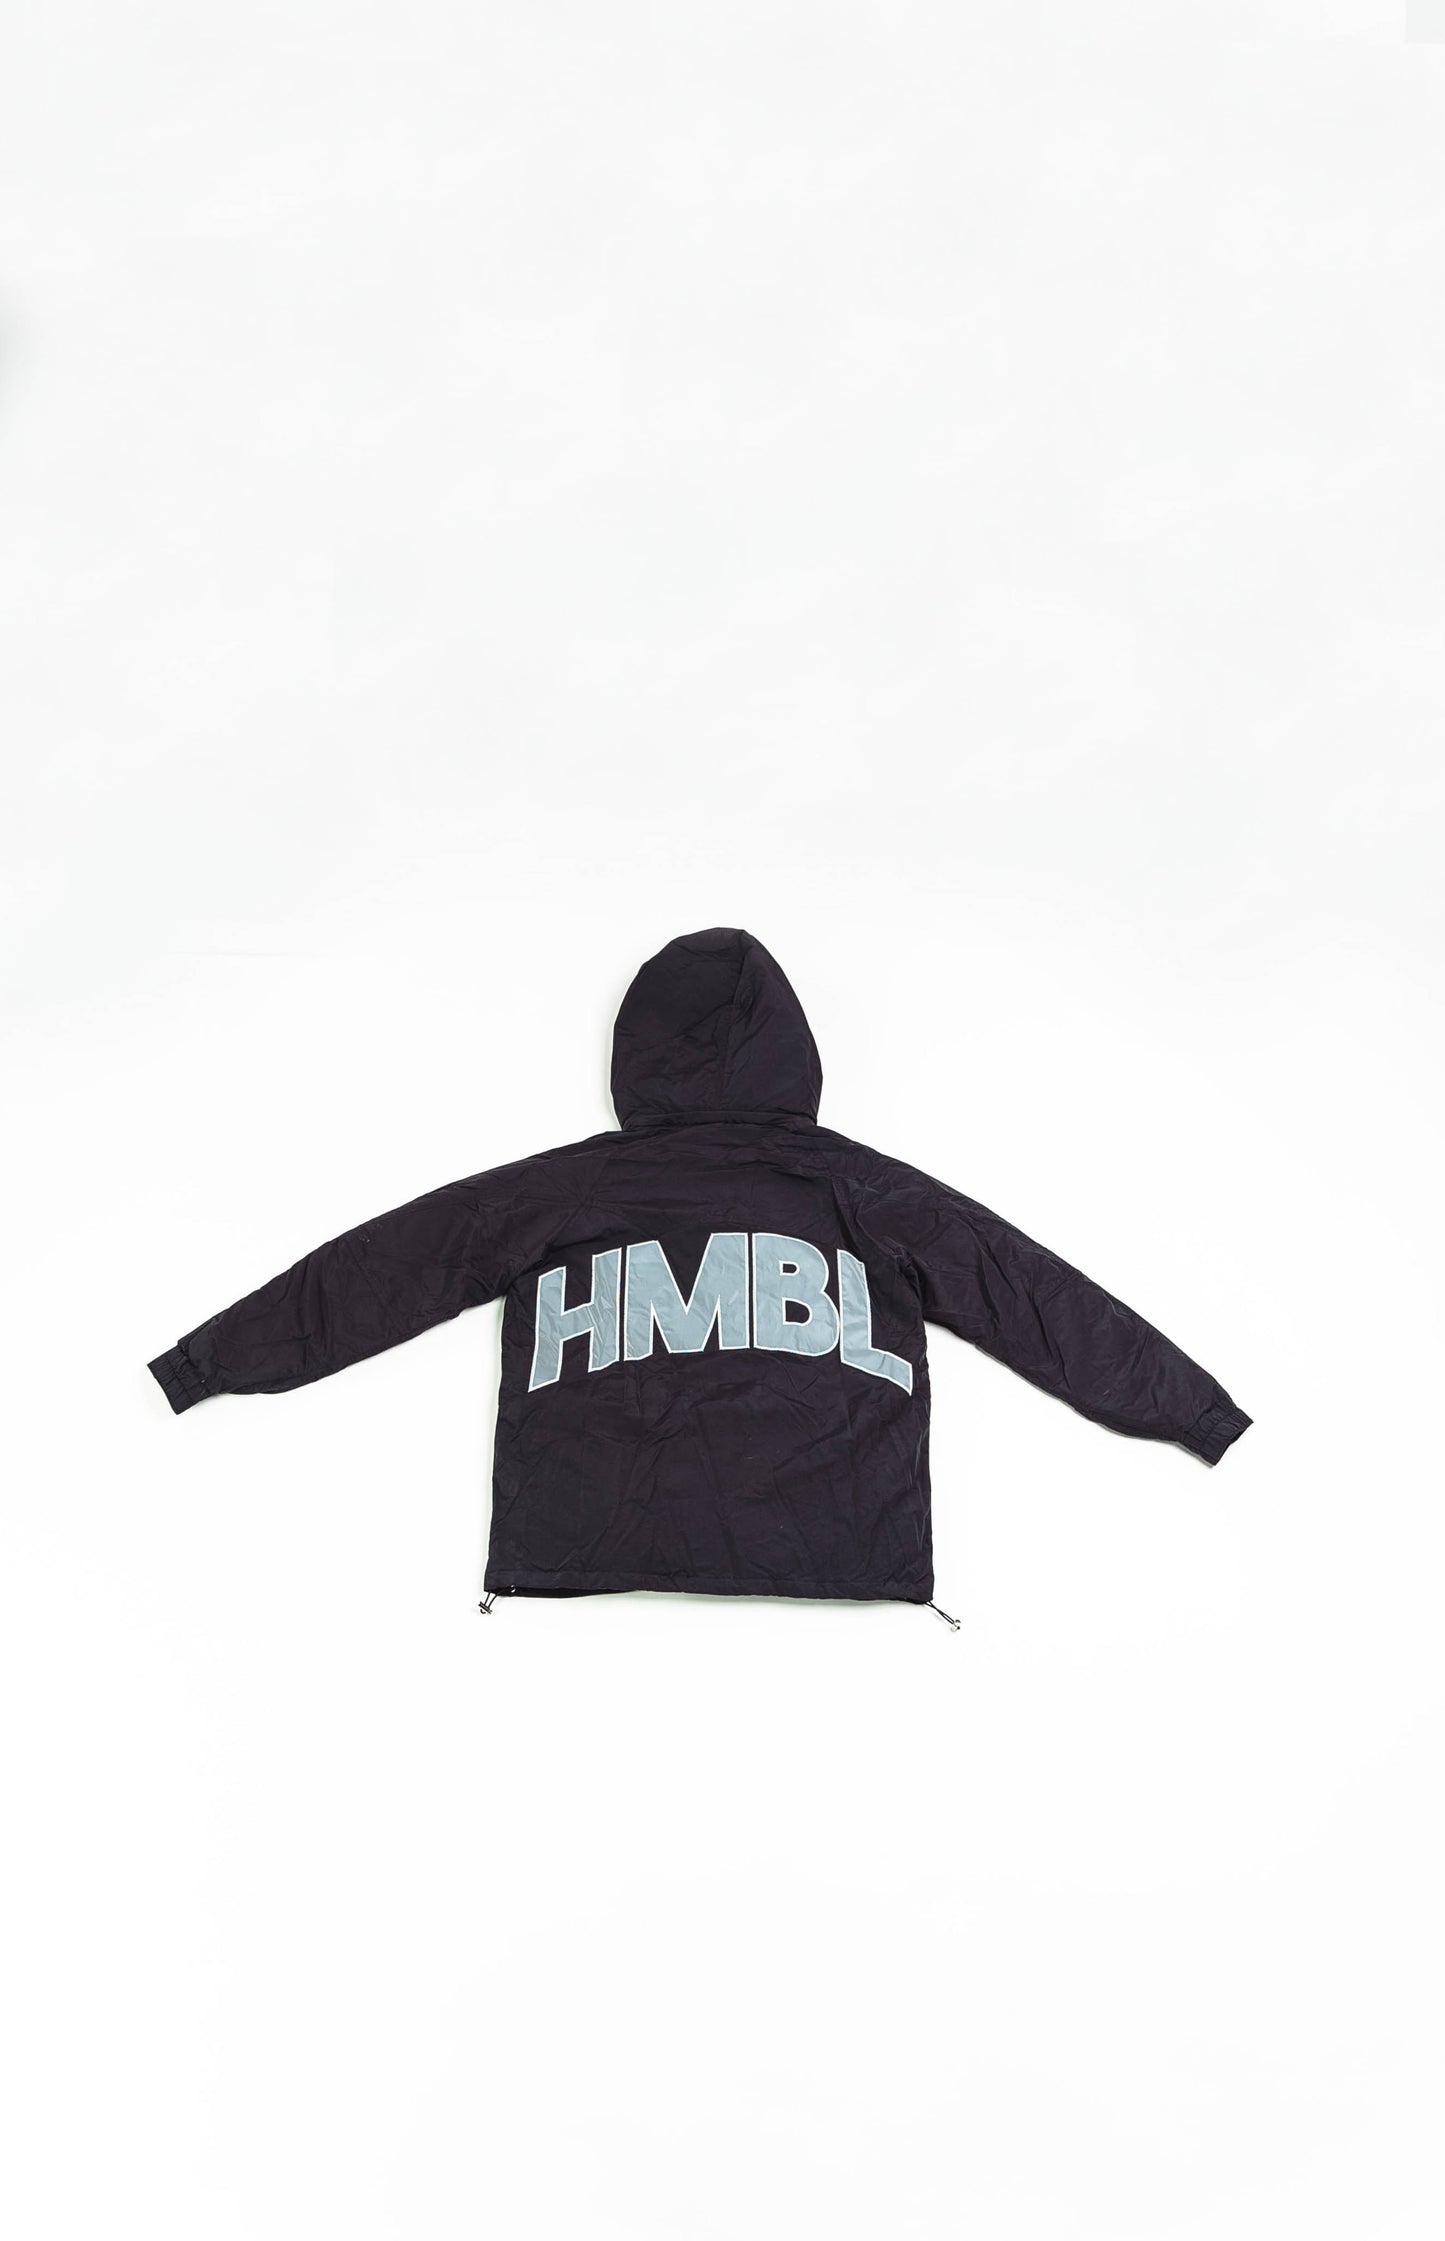 Blackout reflective HMBL jacket